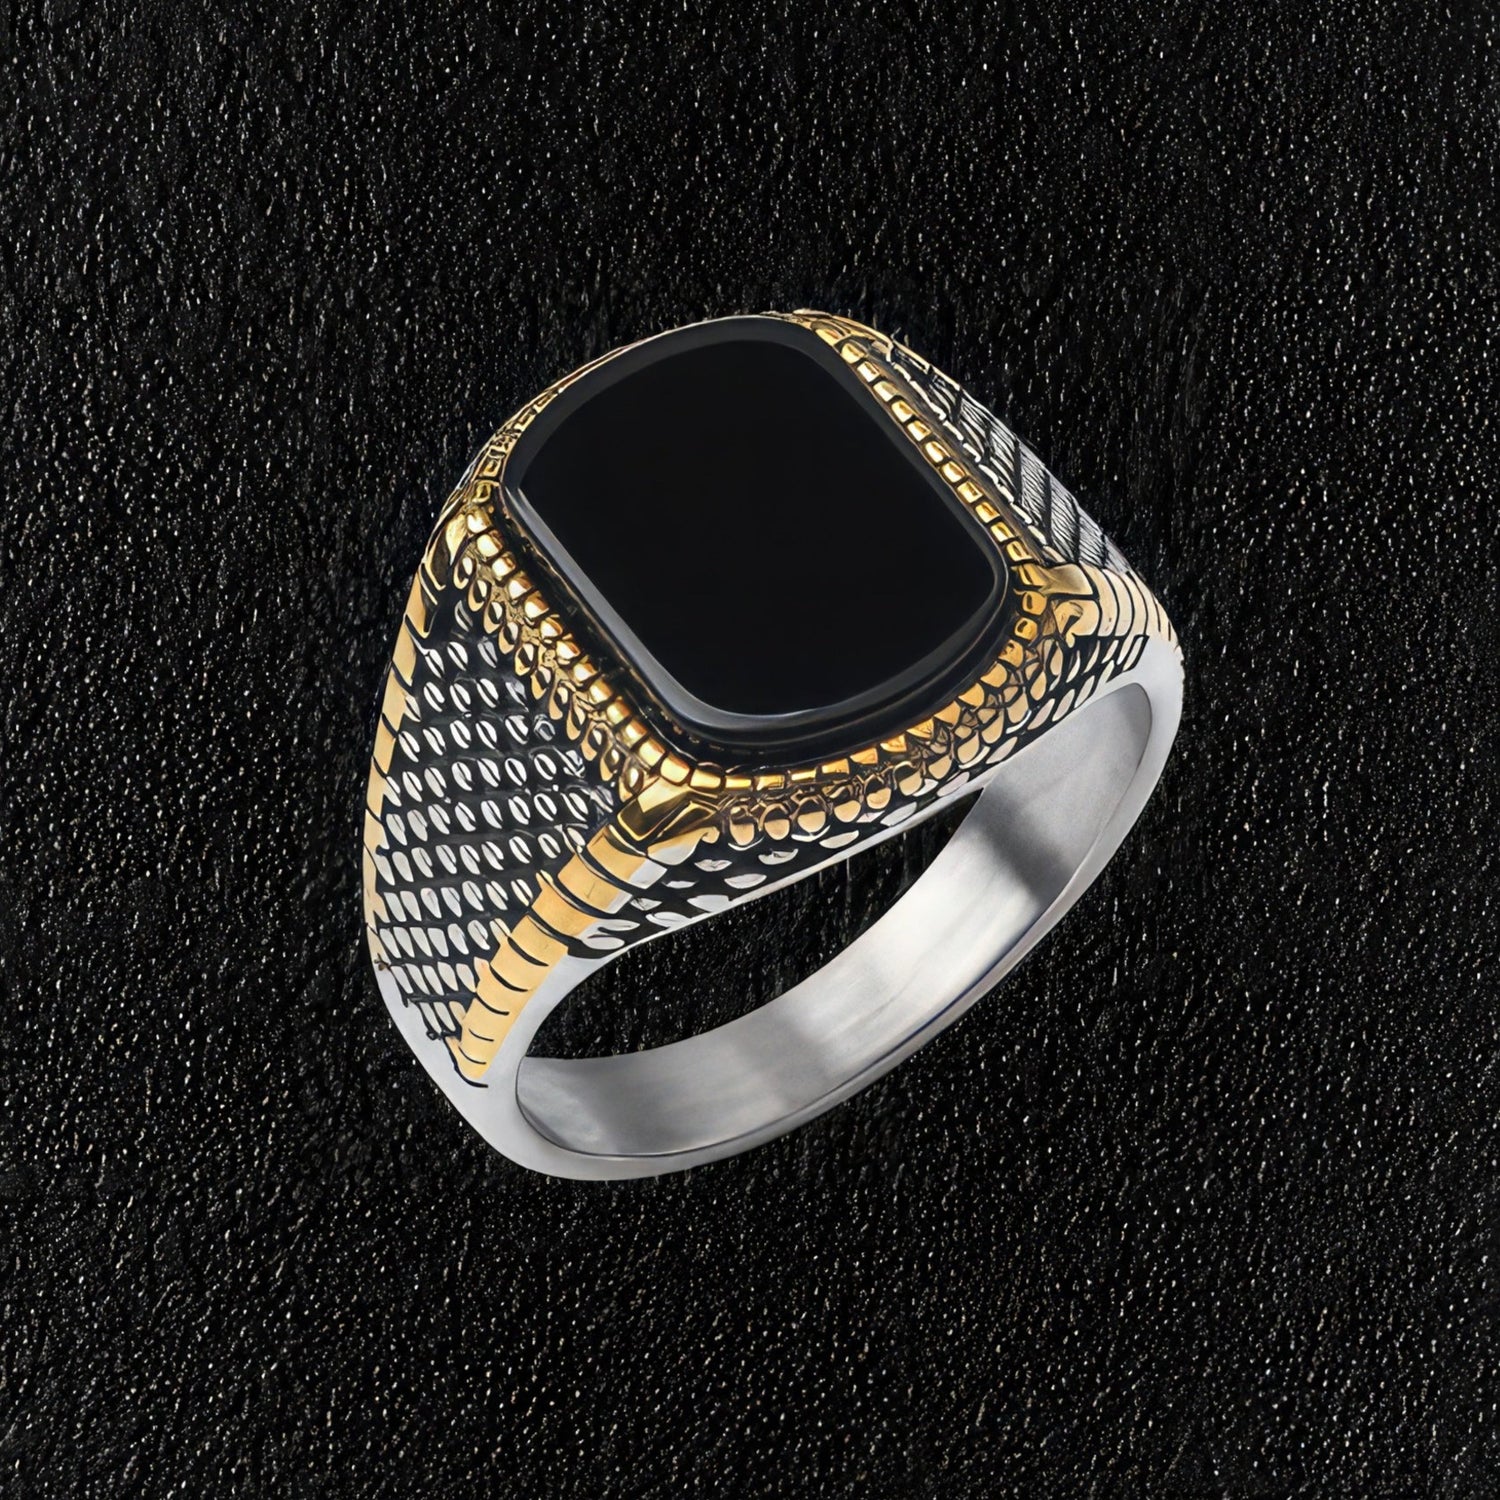 Ottoman Empire Black Onyx Ring